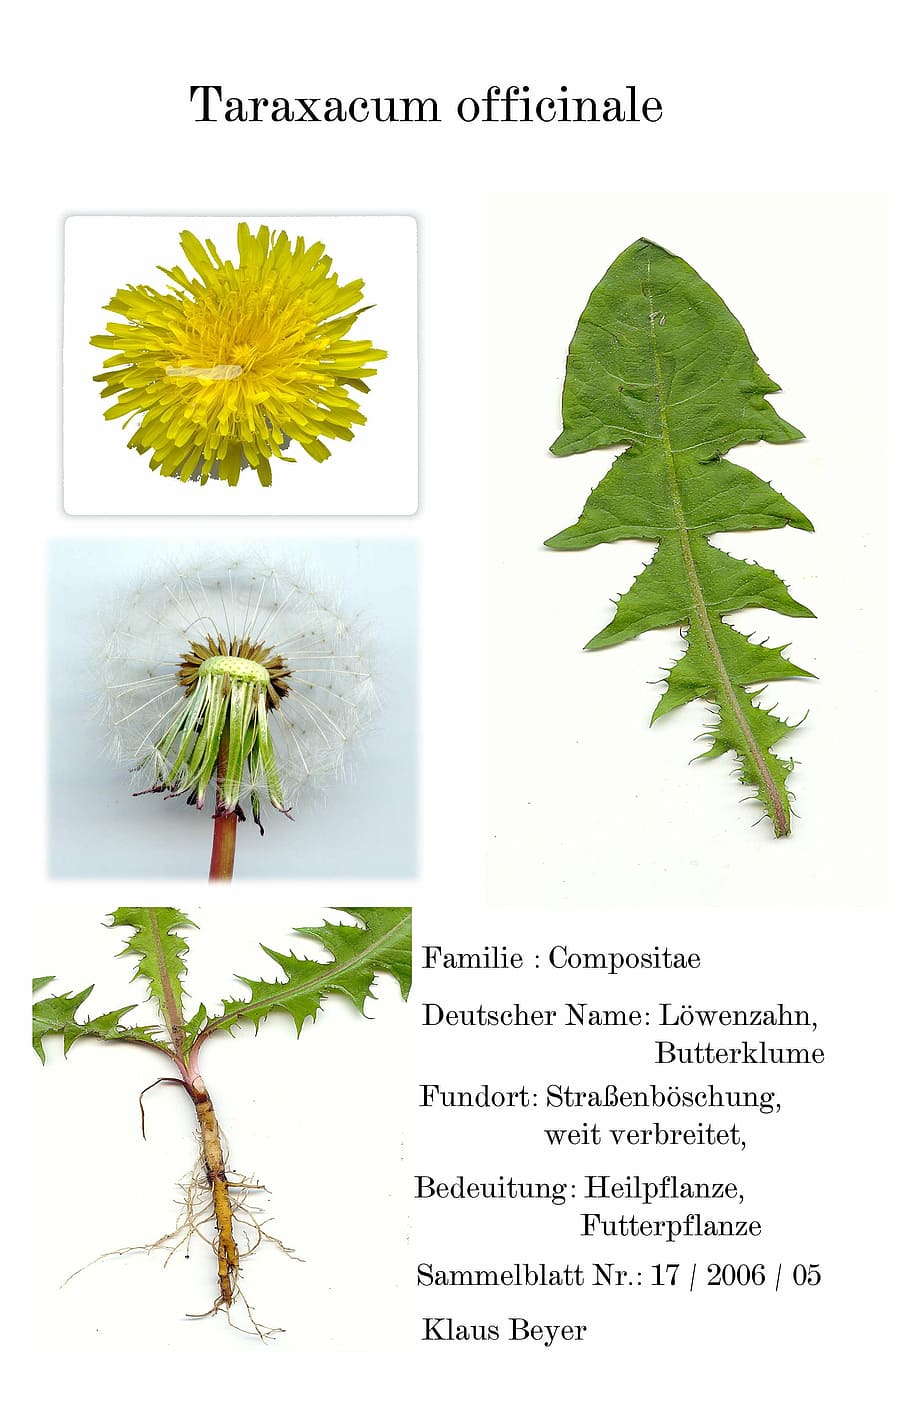 digitized herbarblatt, medicinal plant, scanners, garden, yellow, flower, plant, nature, leaf, botany